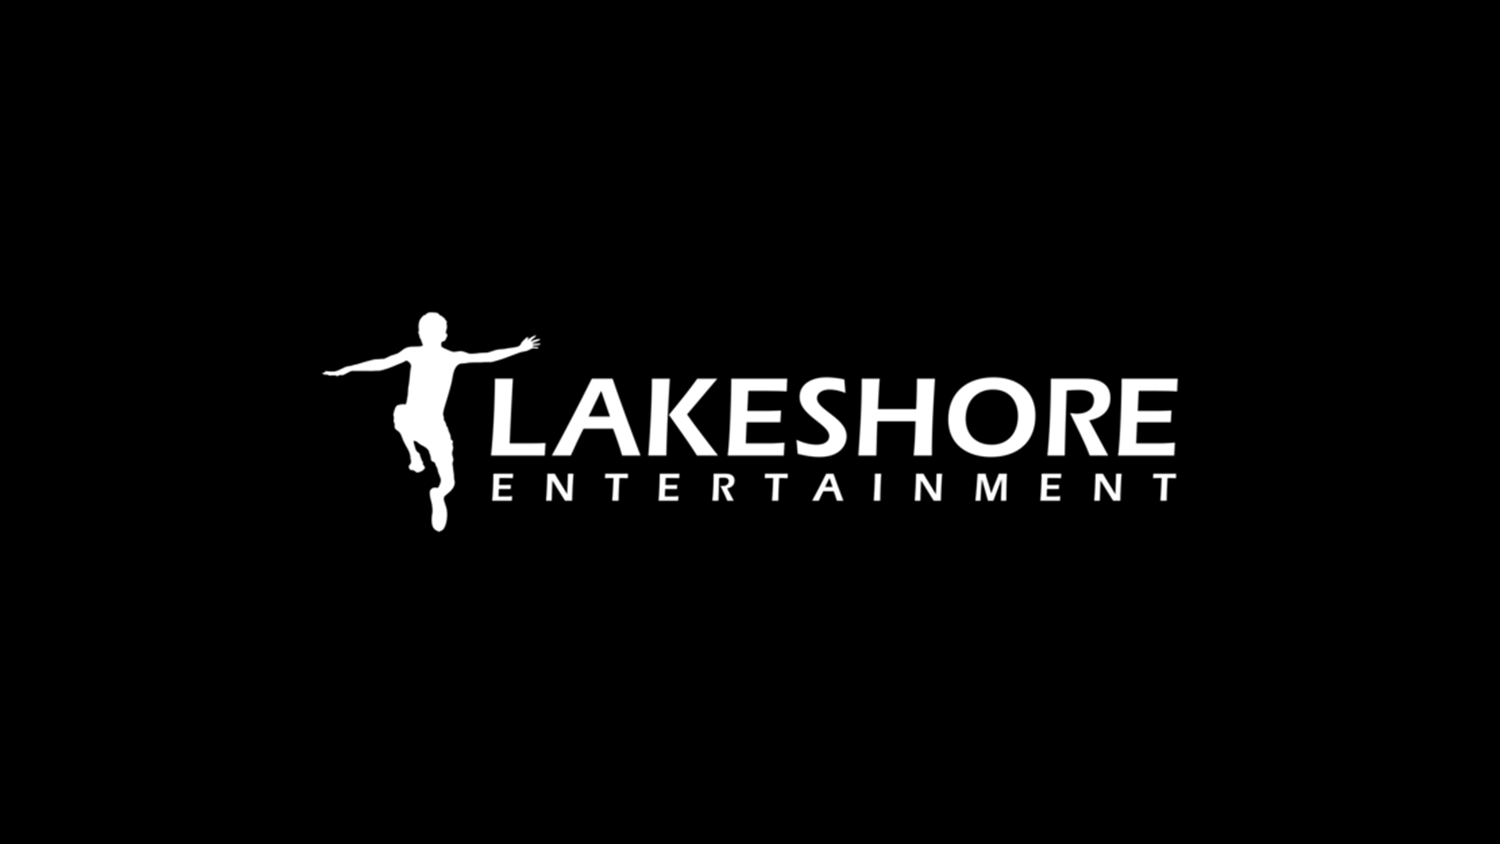 Lakeshore Entertainment Logo - Image - Lakeshore Entertainment print logo.png | Fanmade Films 4 ...